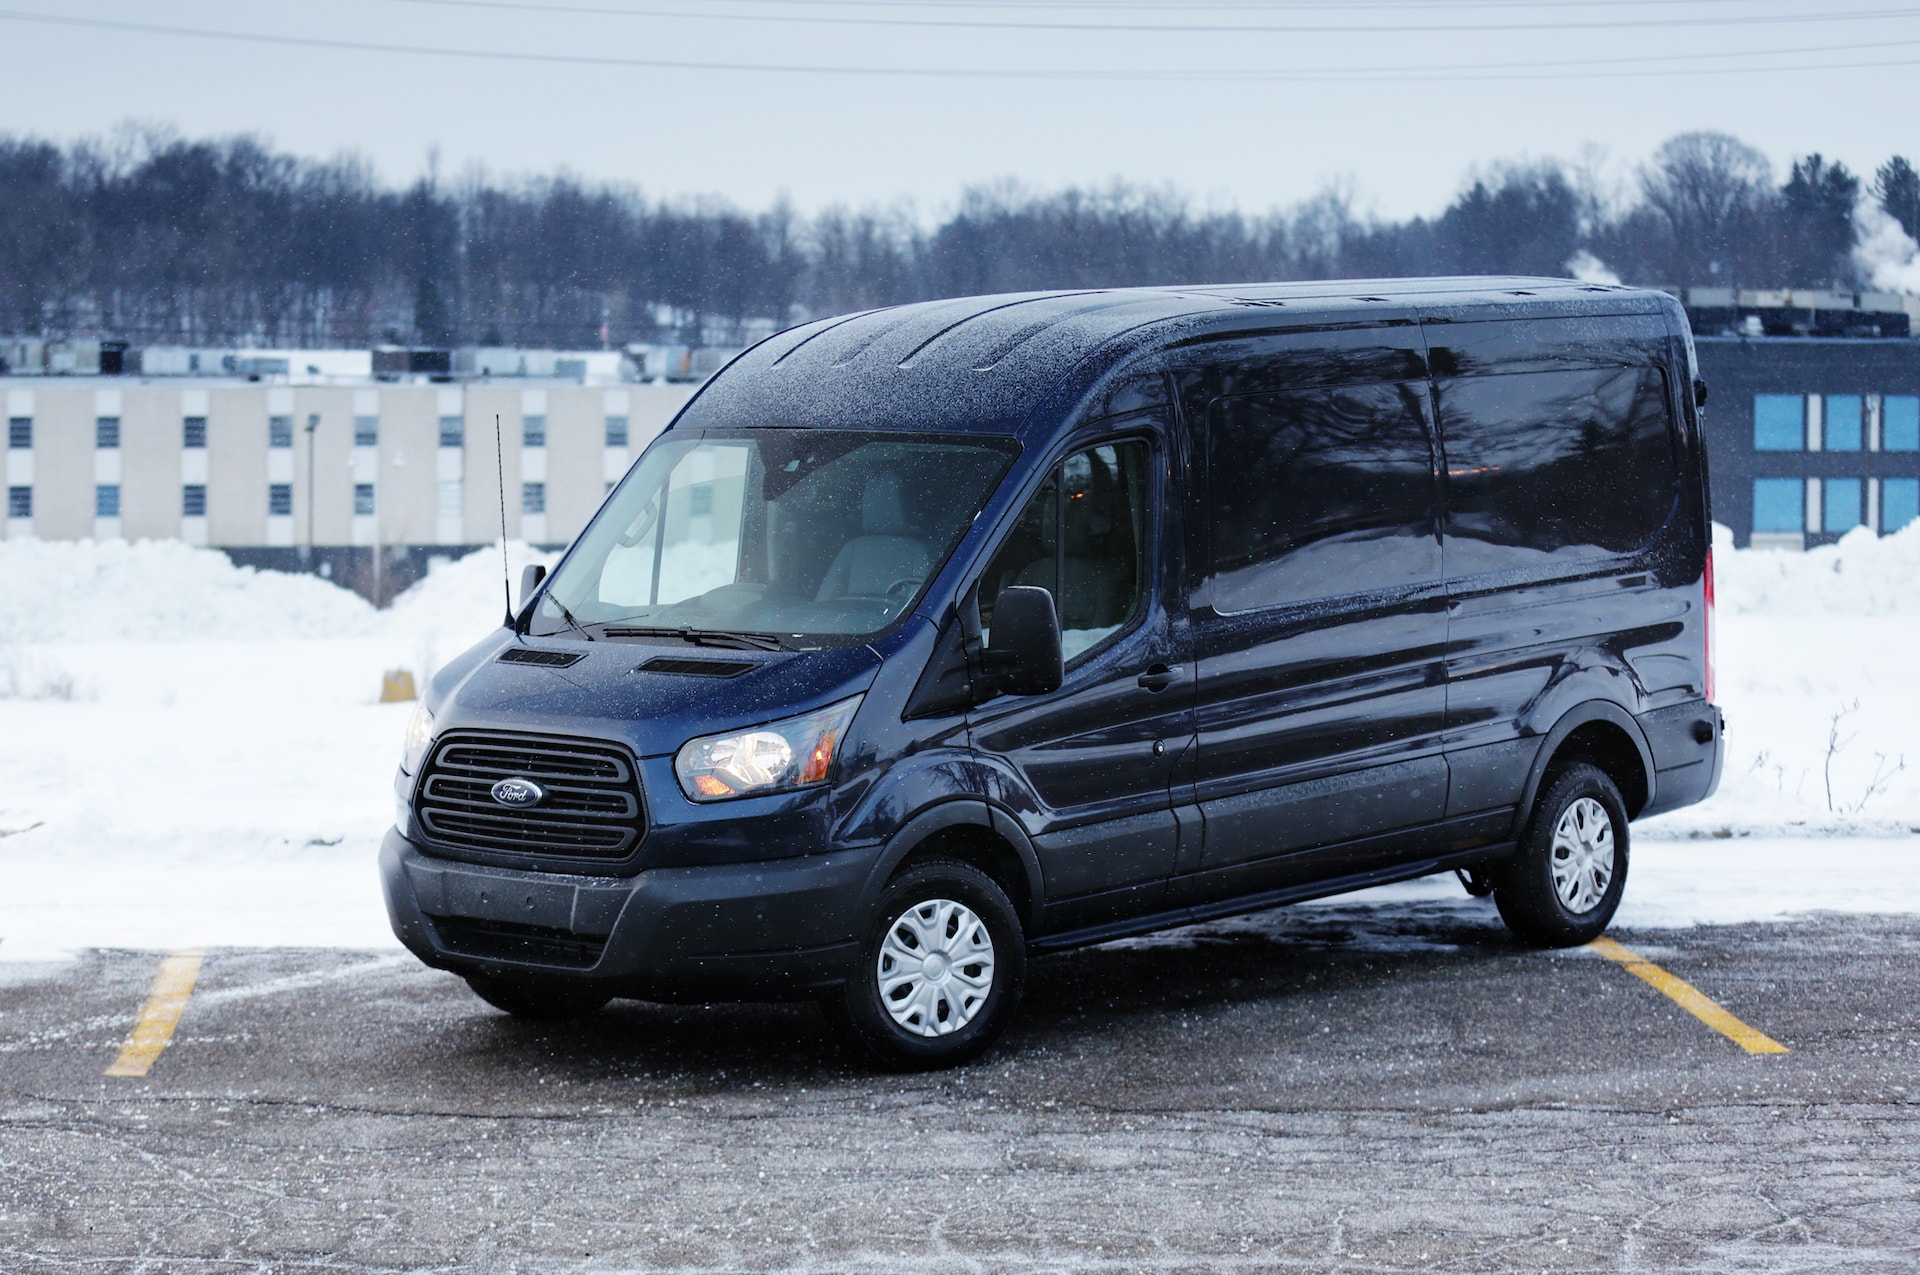 2015 Ford Transit Cargo Van Review